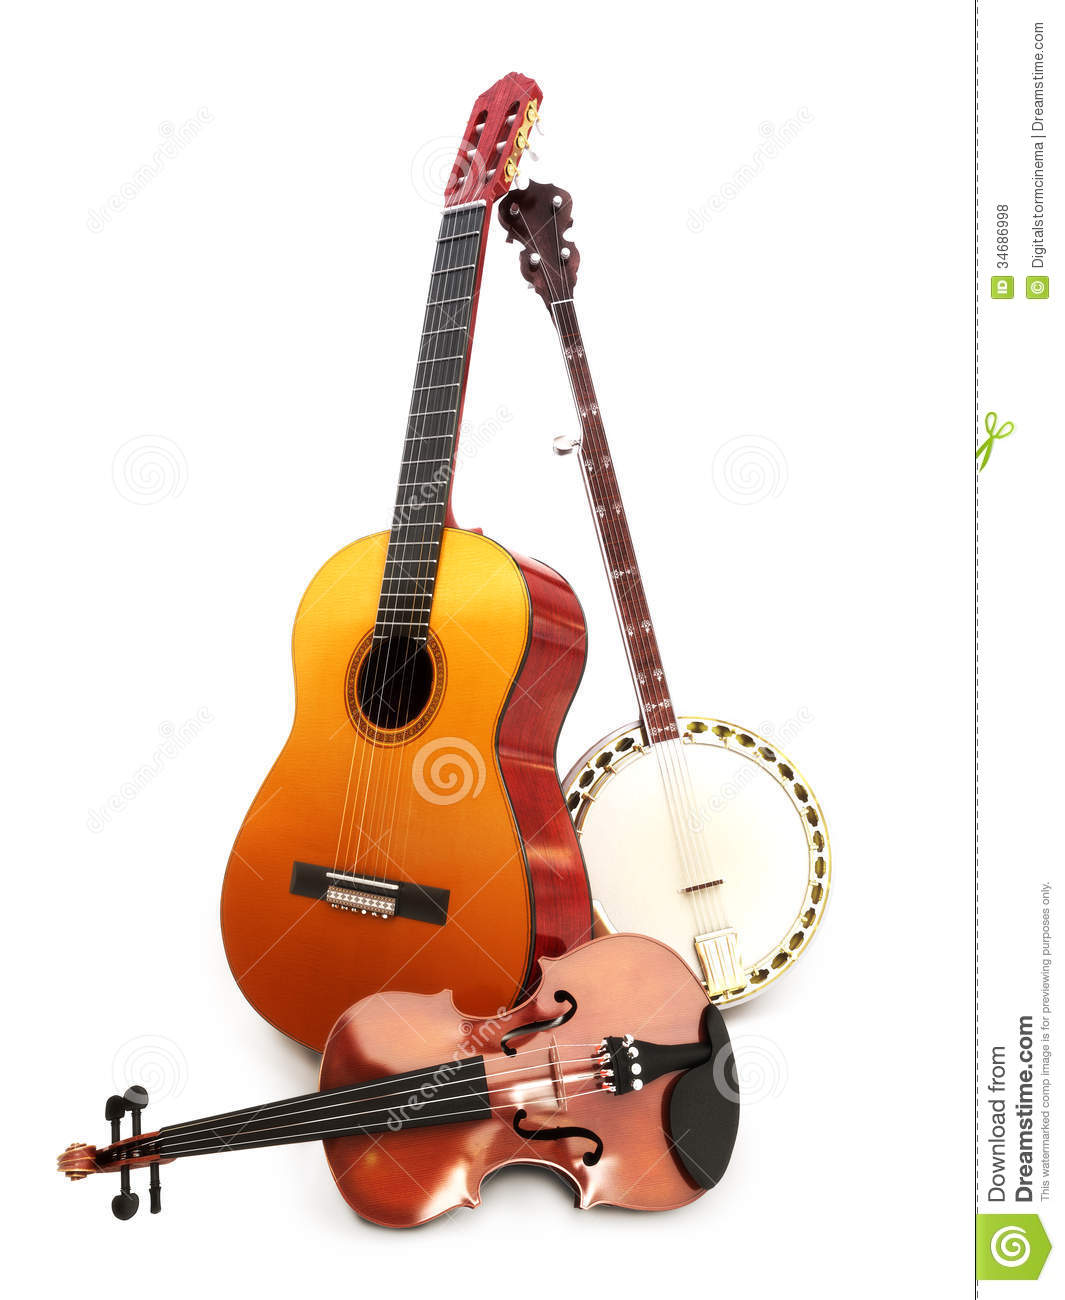 Stringed Music Instruments Guitar Banjo Violin On A White Background